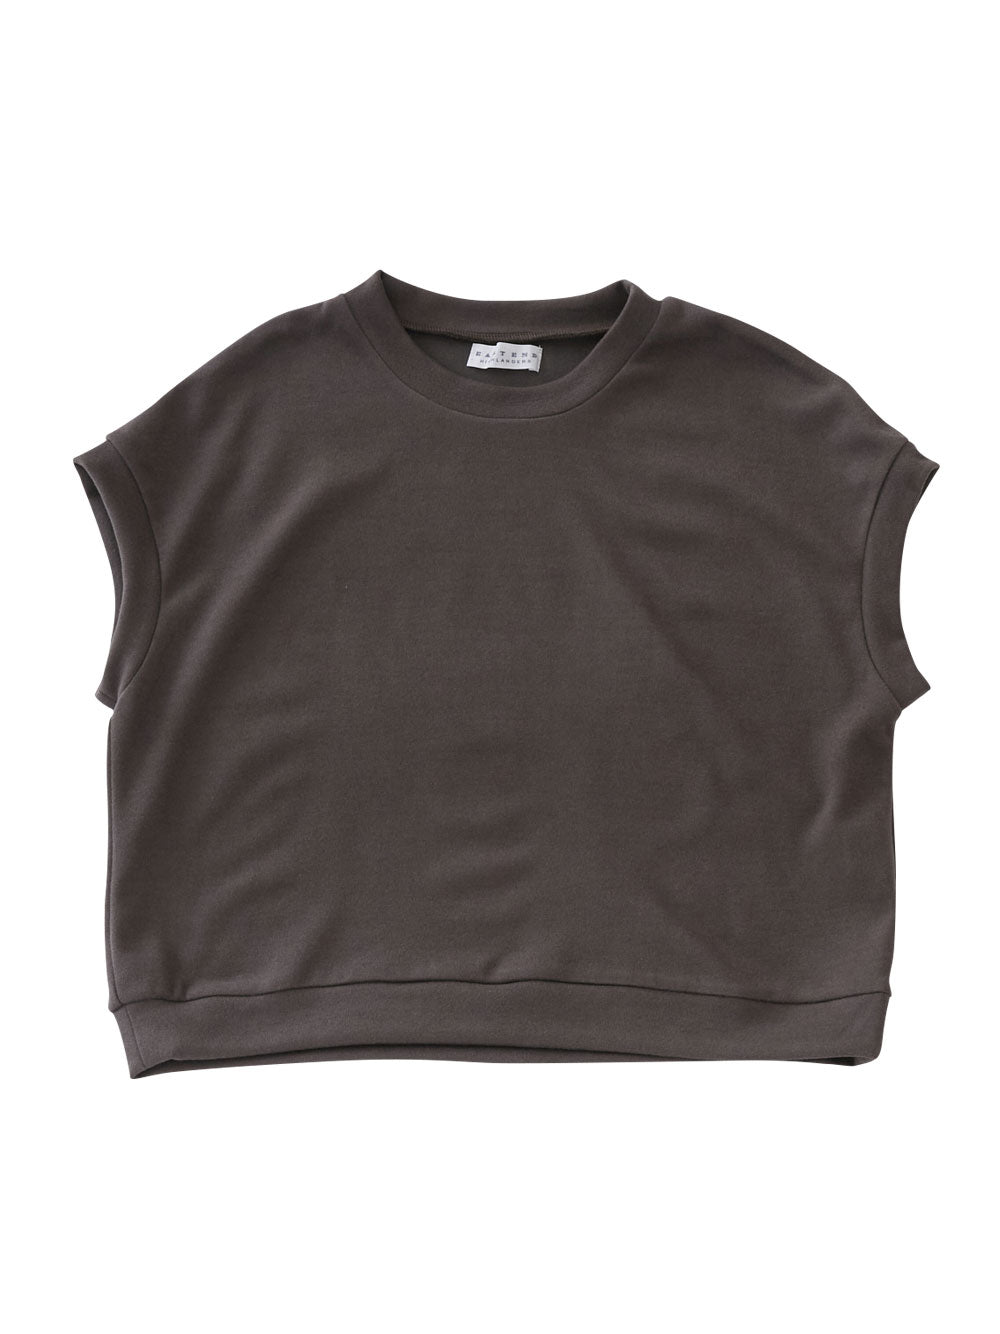 PREORDER: Brown Jersey Sweatshirt